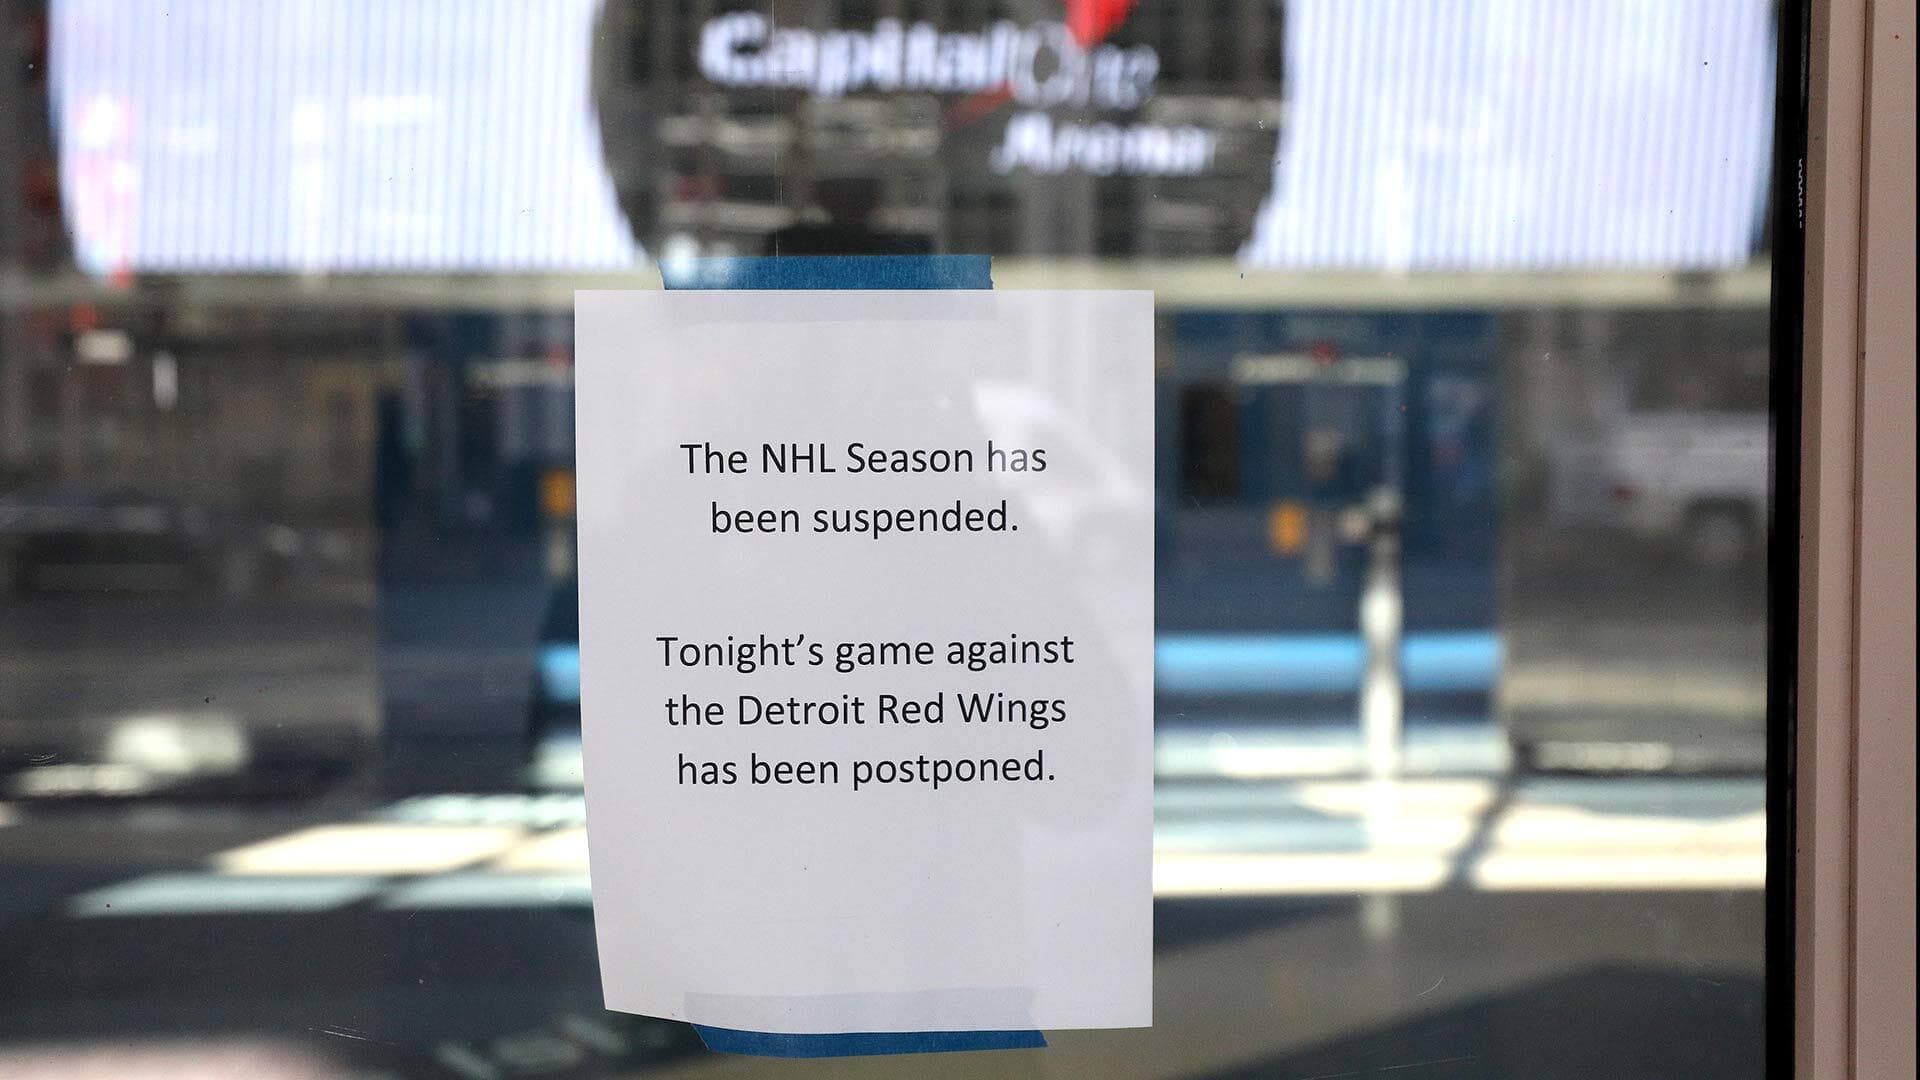 Game canceled